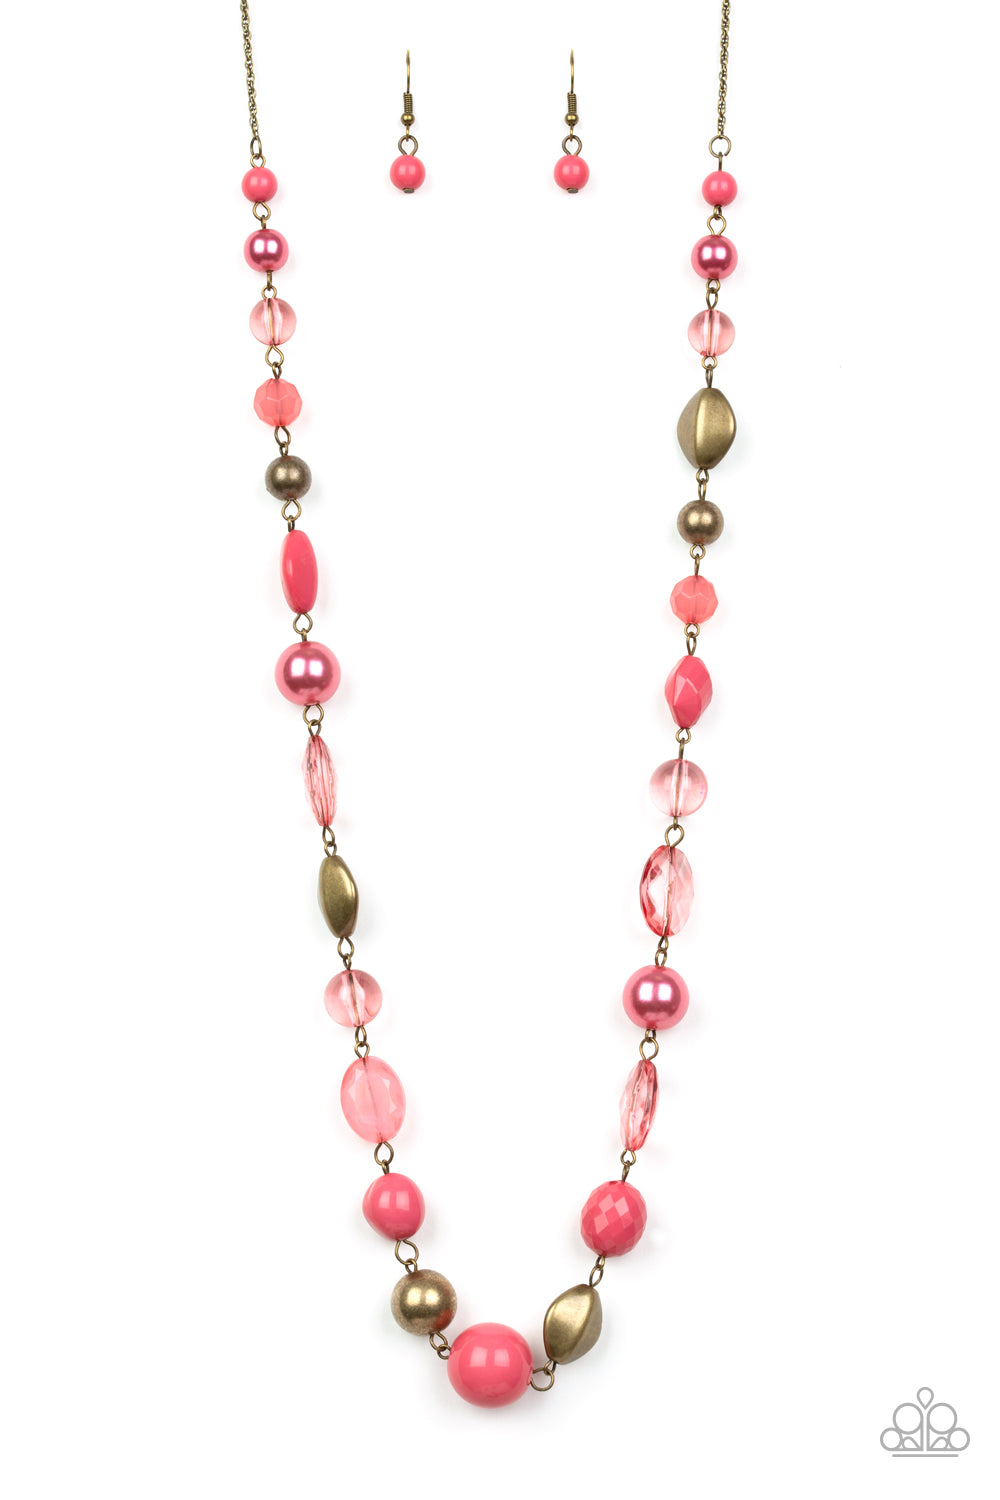 Secret Treasure Pink Paparazzi Necklaces Cashmere Pink Jewels - Cashmere Pink Jewels & Accessories, Cashmere Pink Jewels & Accessories - Paparazzi